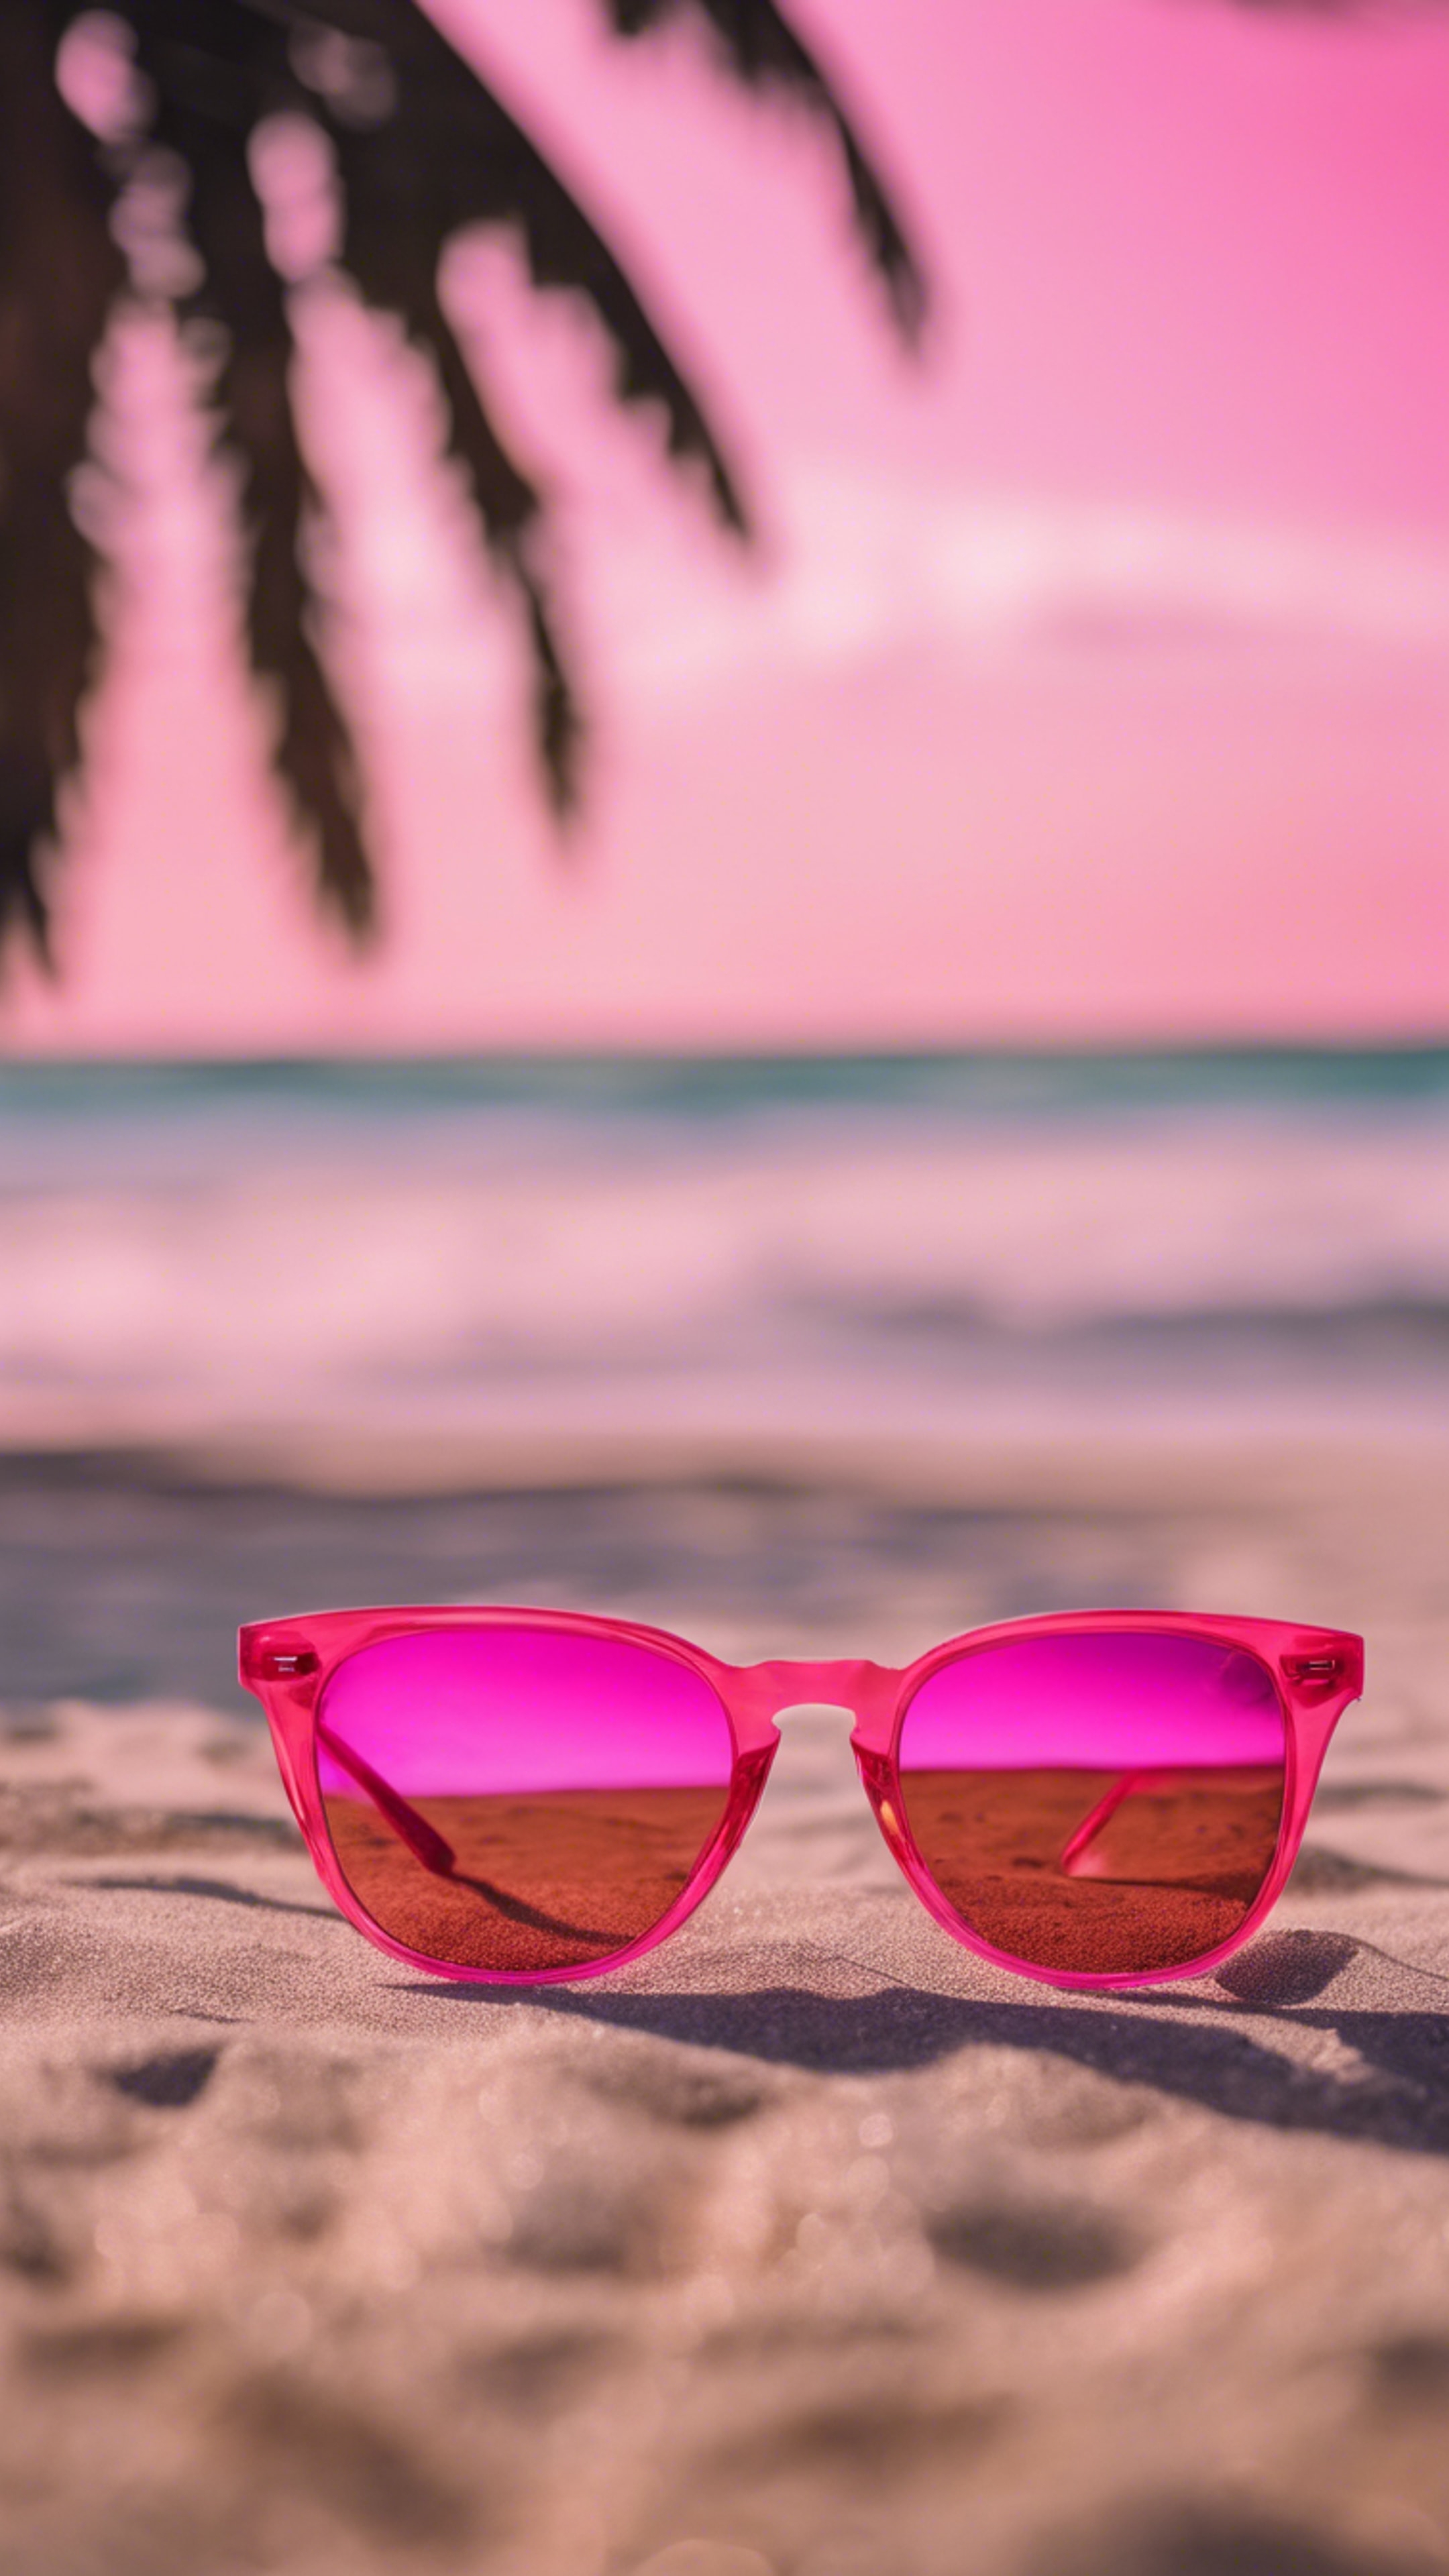 A pair of neon pink sunglasses reflecting the vibrant summer beach scene. Wallpaper[24de7597184840d886b9]